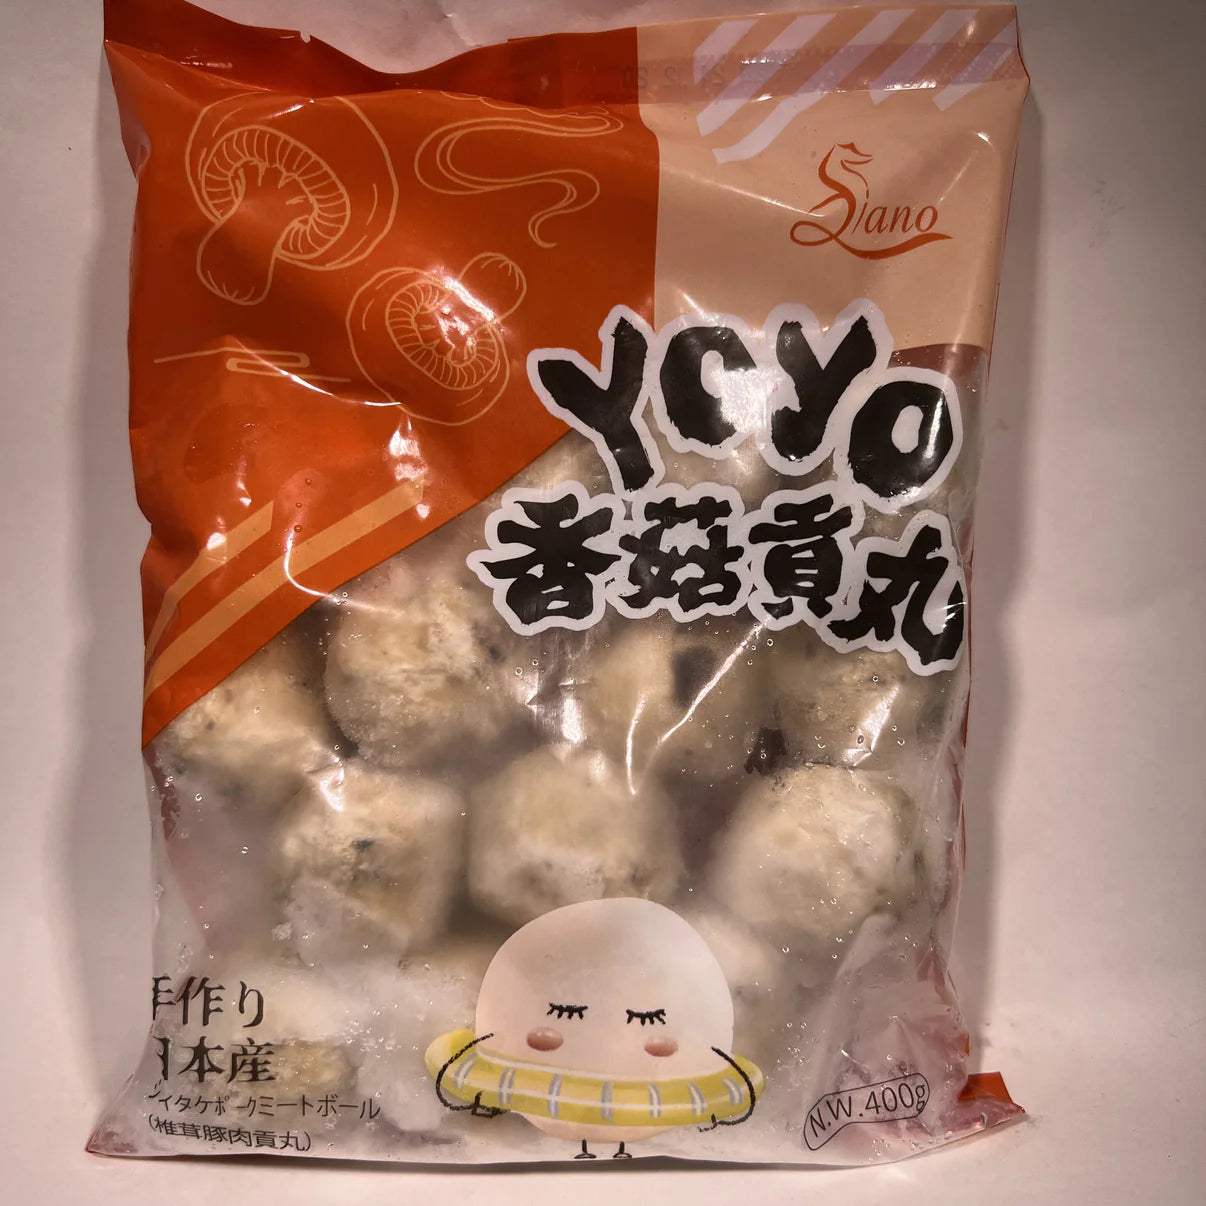 Frozen YOYO Kohko Konmaru (handmade shiitake mushroom dumplings) 400g